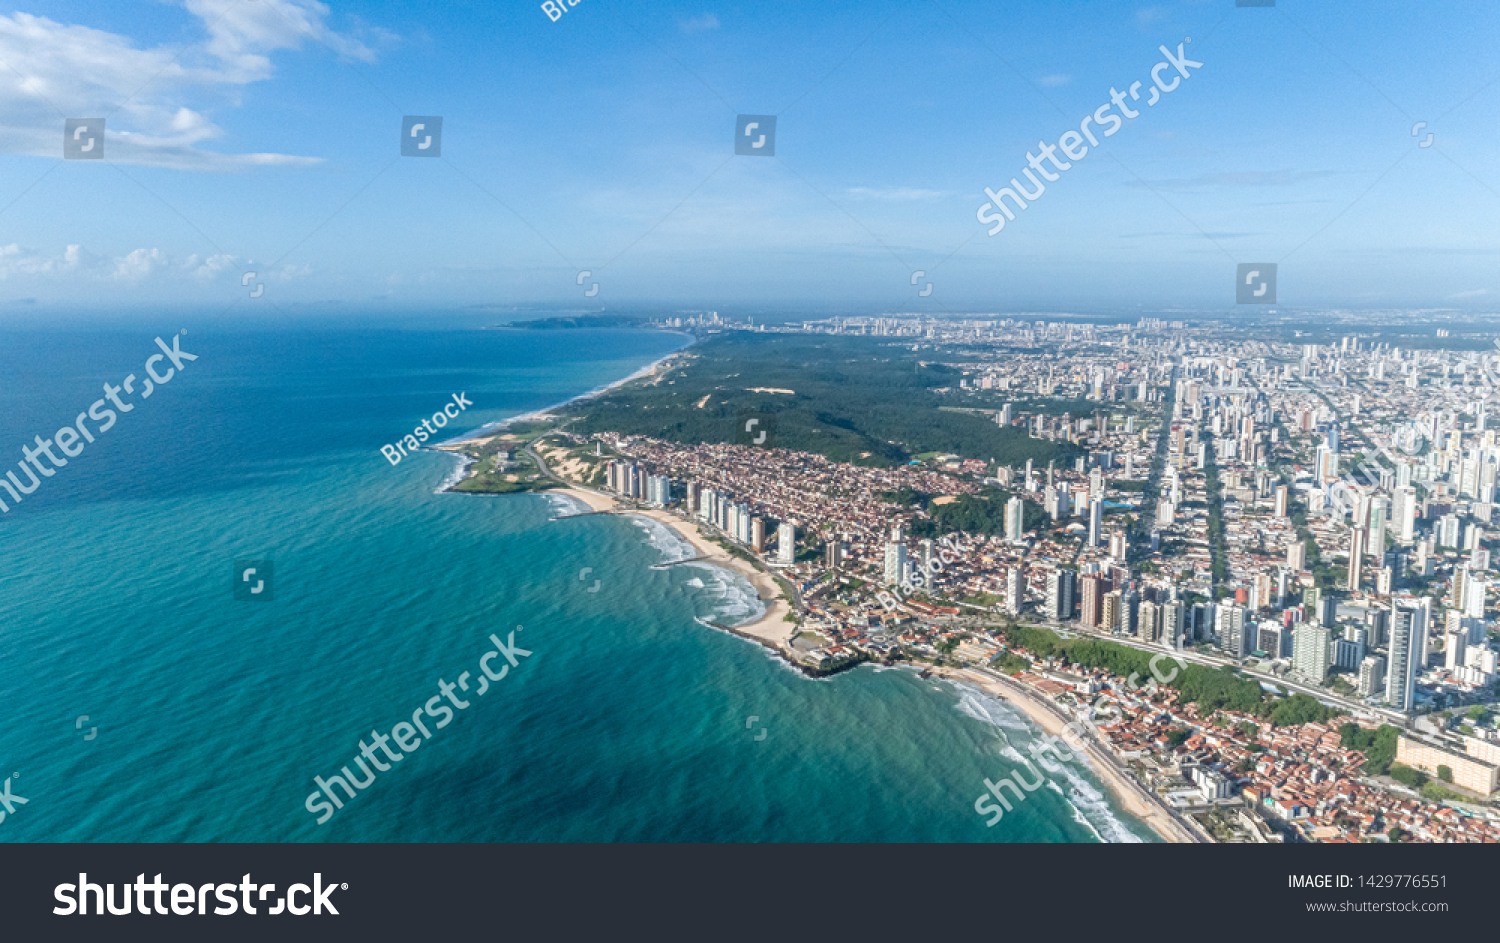 Beautiful aerial image of the city of Natal, Rio Grande do Norte, Brazil. #1429776551